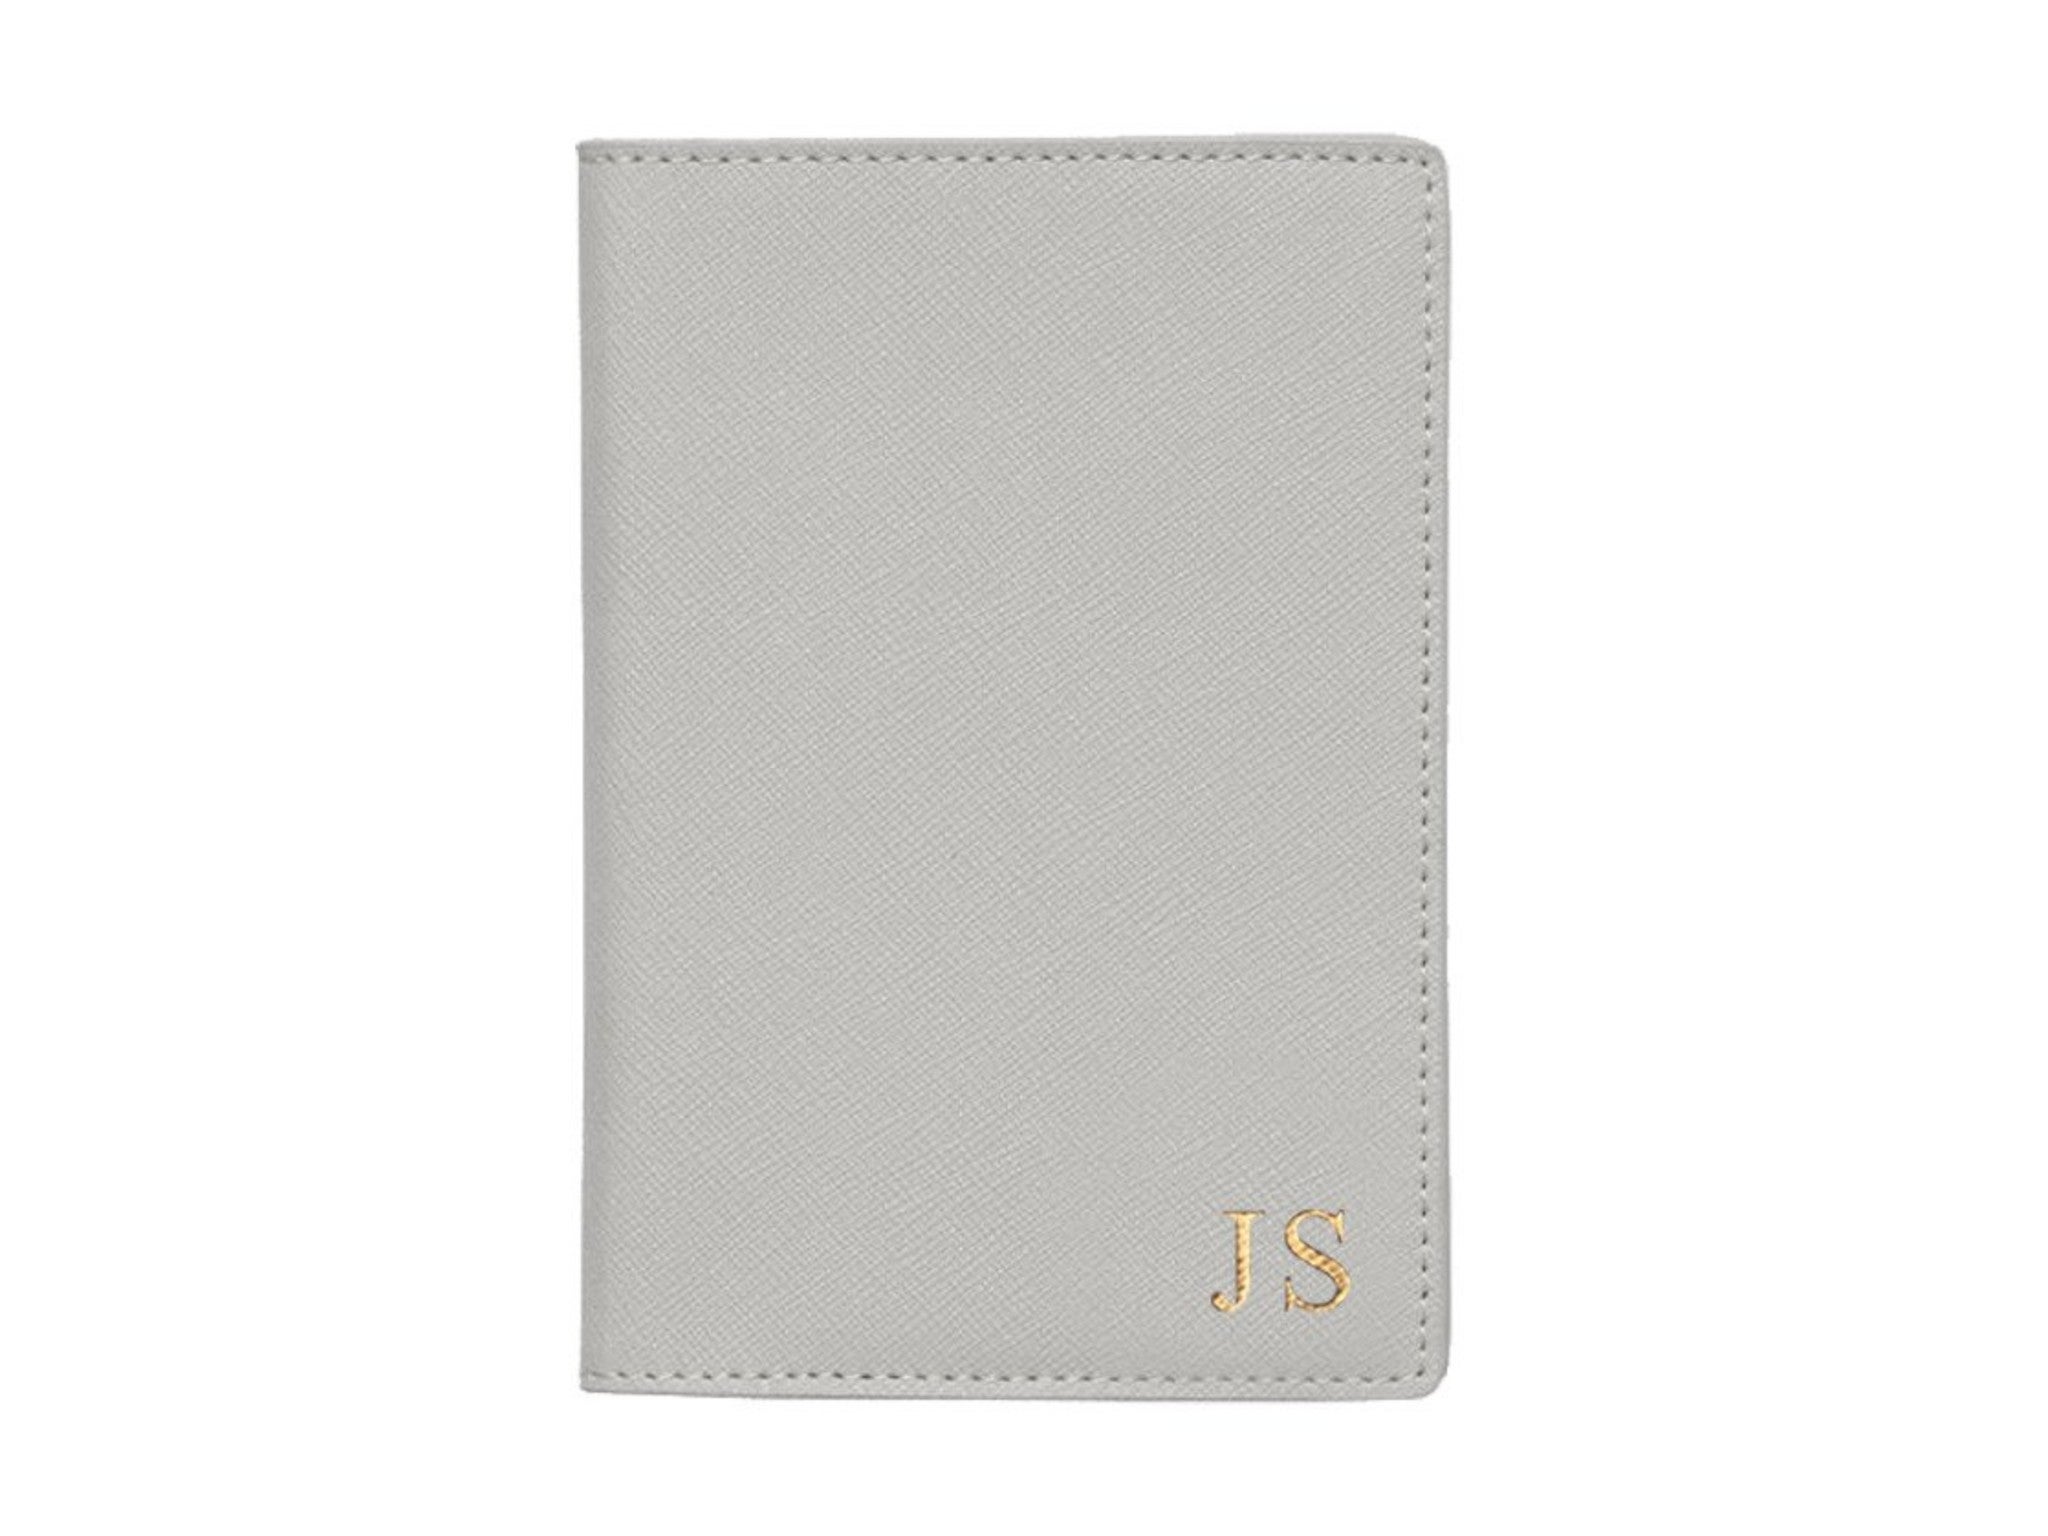 HB London silver grey saffiano leather passport holder indybest.jpeg